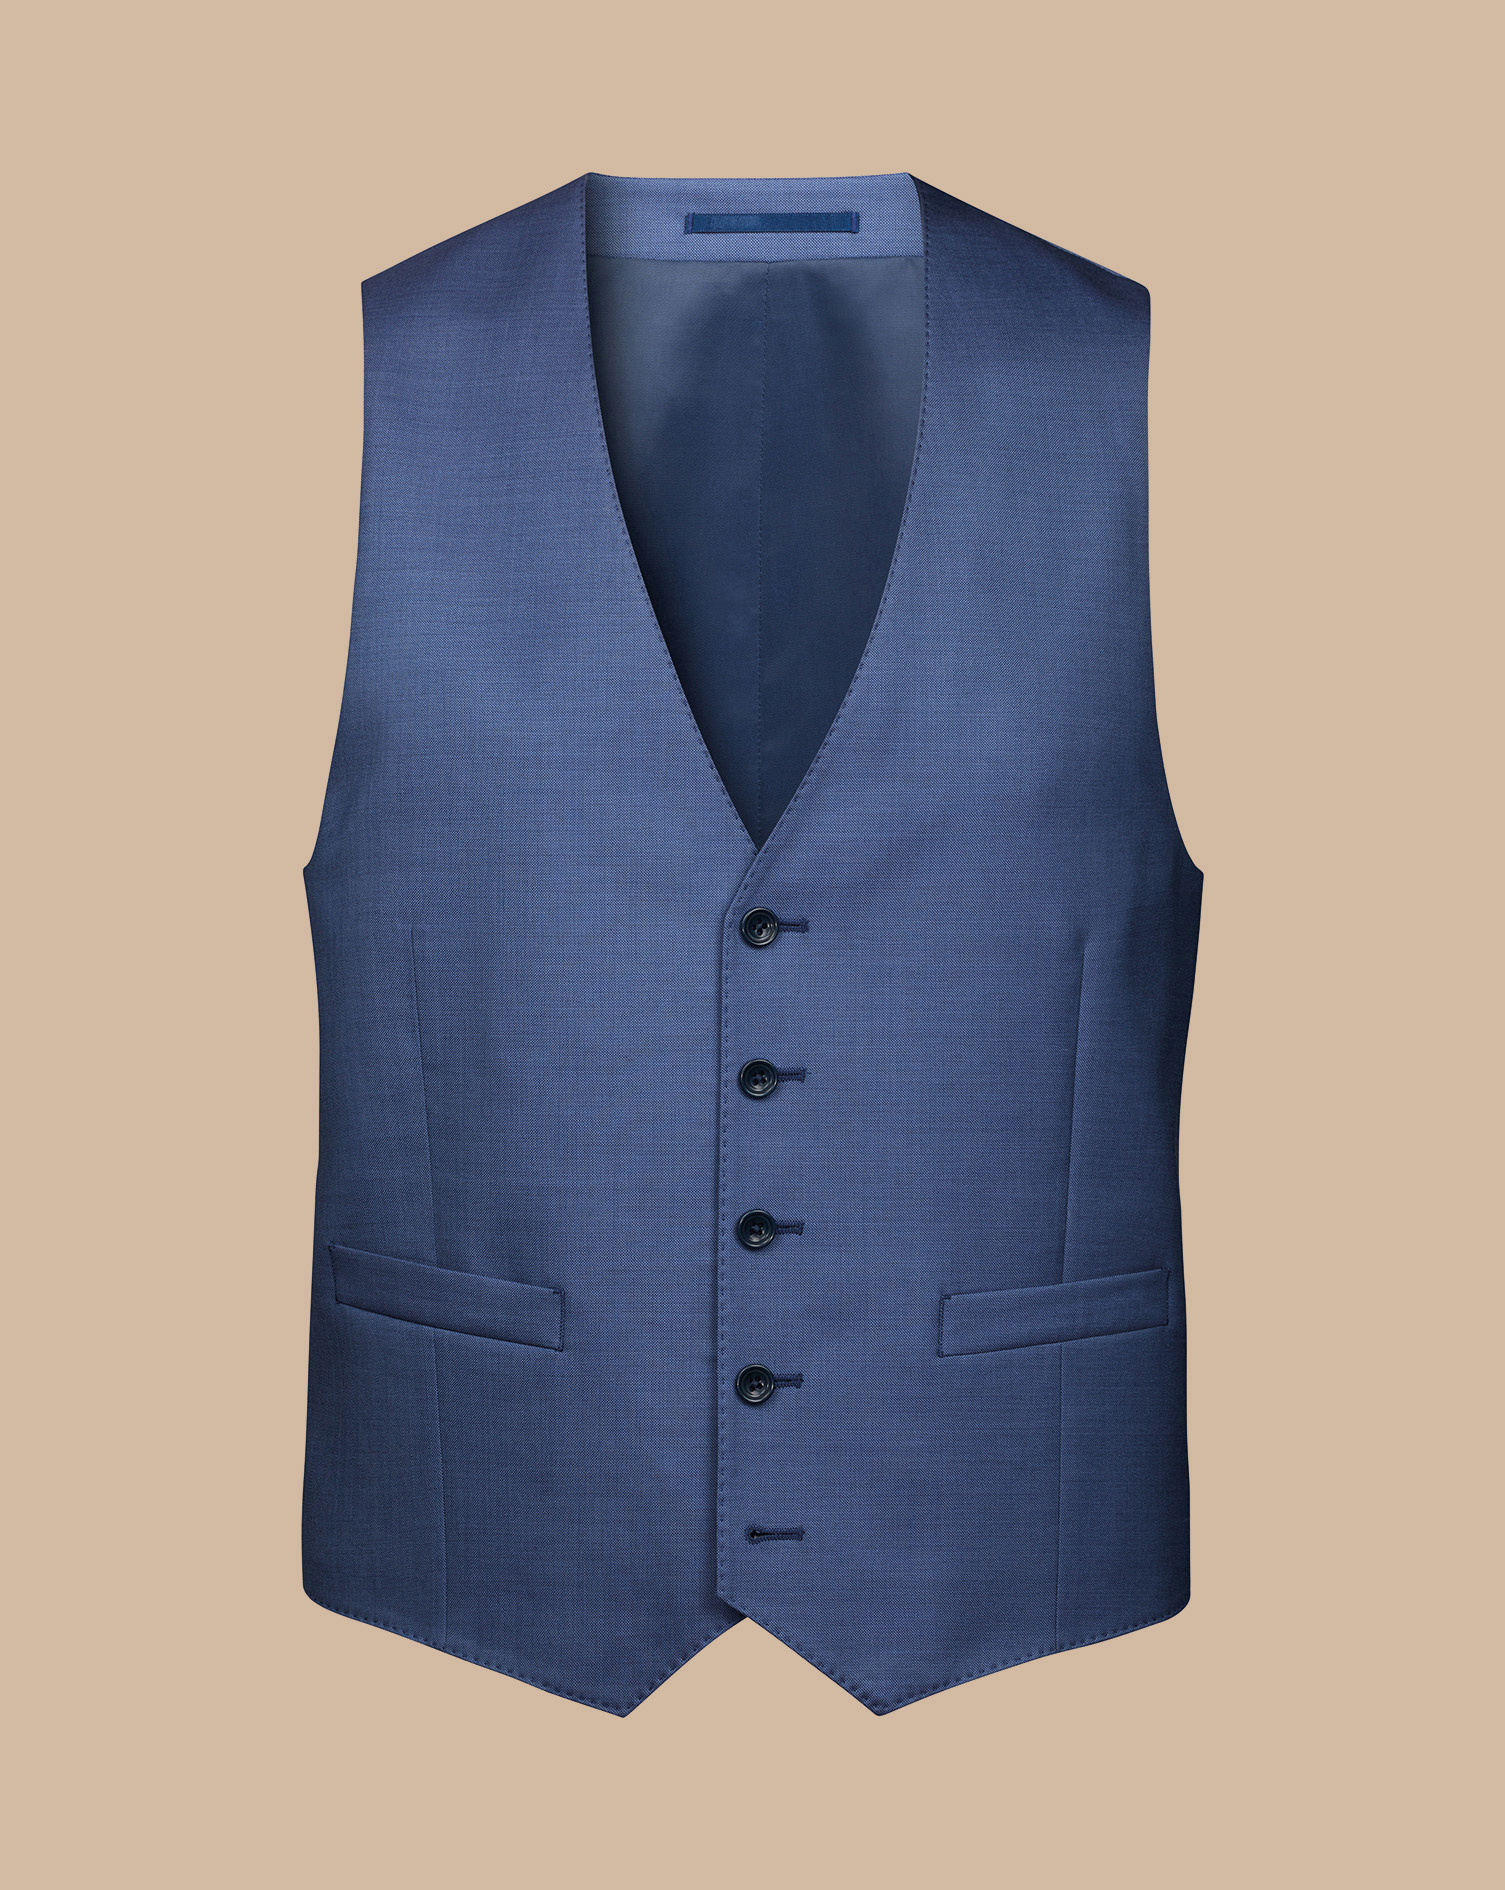 Men's Charles Tyrwhitt Ultimate Performance Sharkskin Suit Waistcoat - Indigo Blue Size w44 Wool
